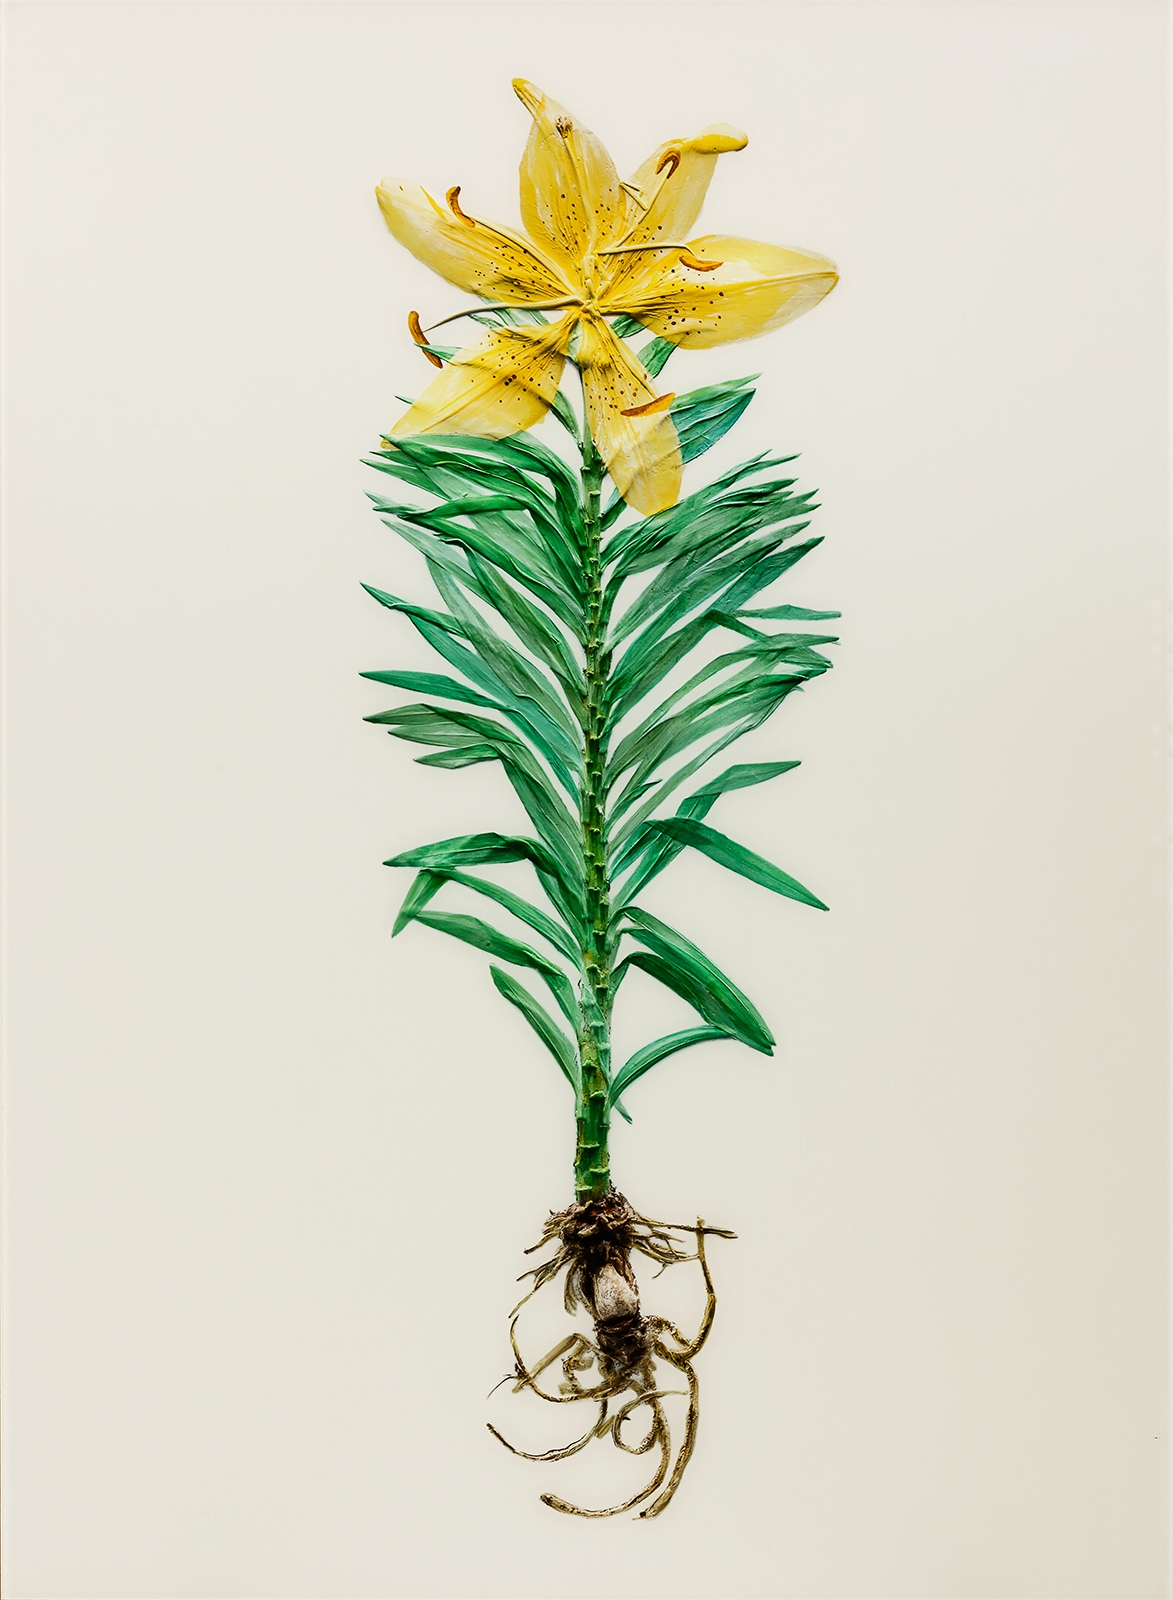 Artwork by Koo Sung Soo, Photogenic Drawing - Yellow Lilium Iancifolium, Made of c-print, diasec